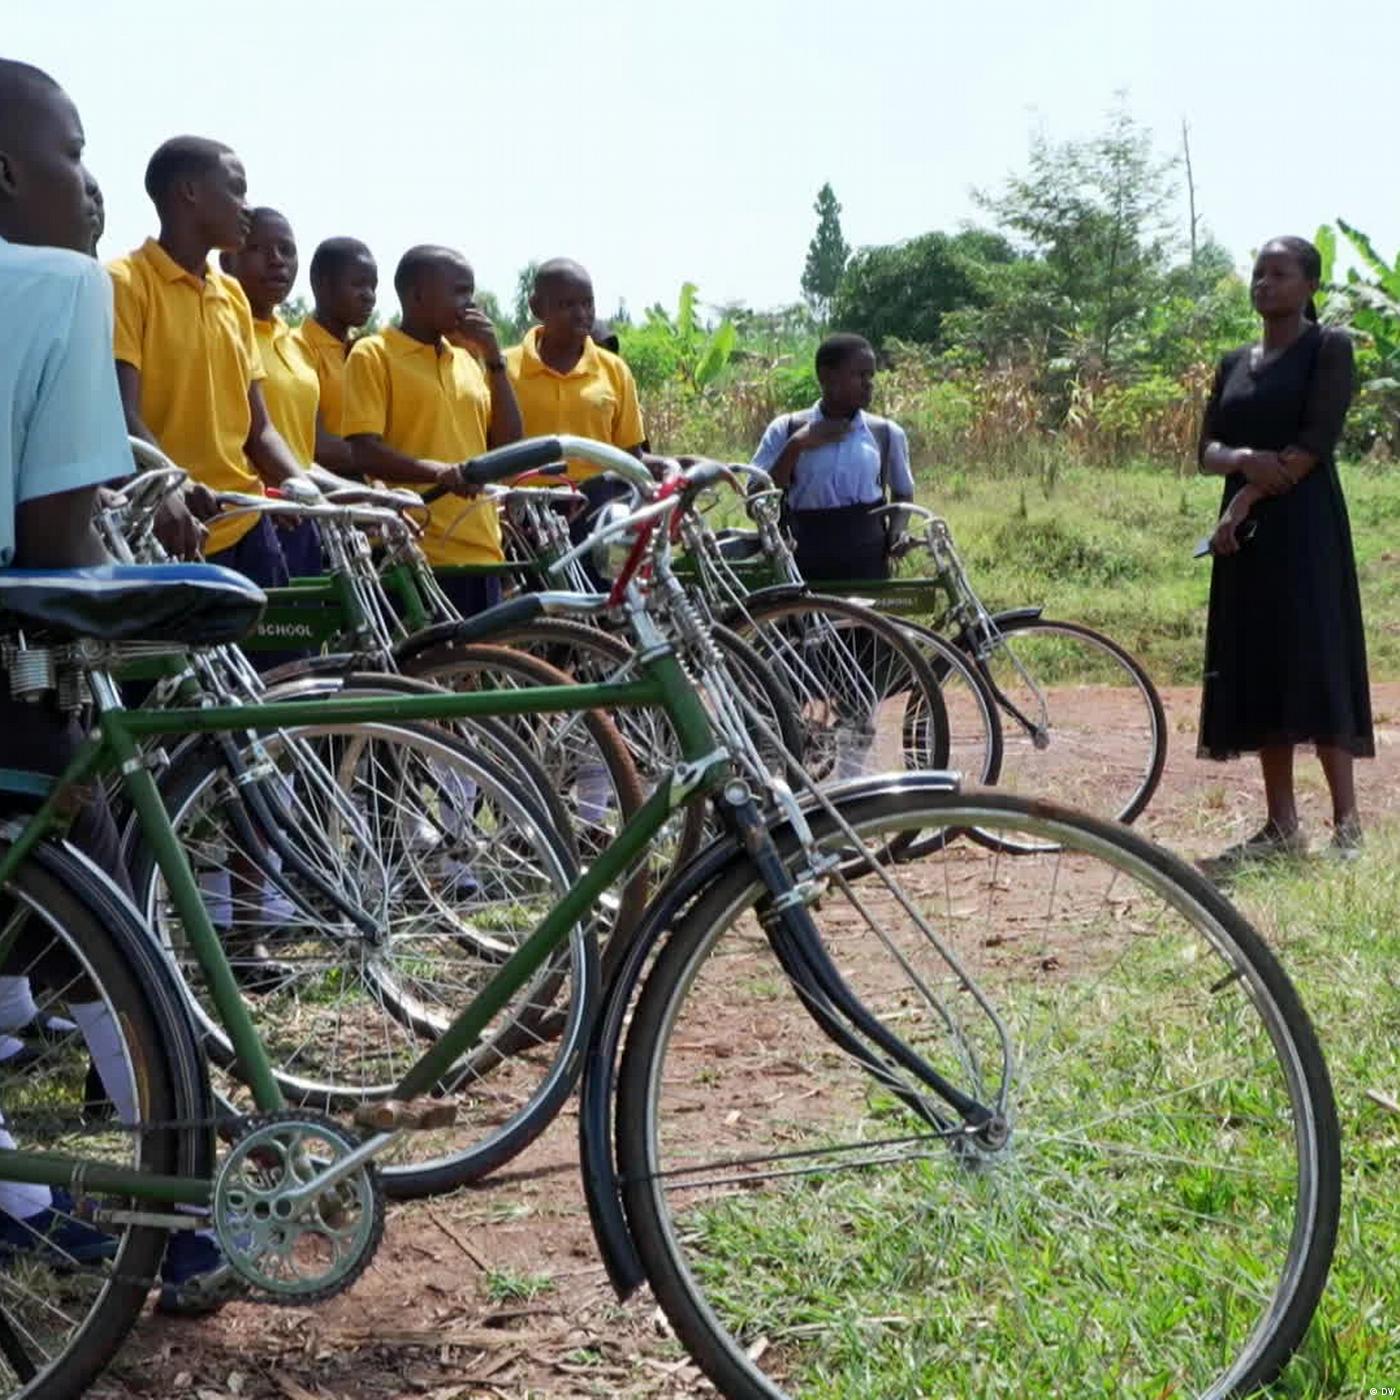 Bikes help girls in rural Uganda get an education